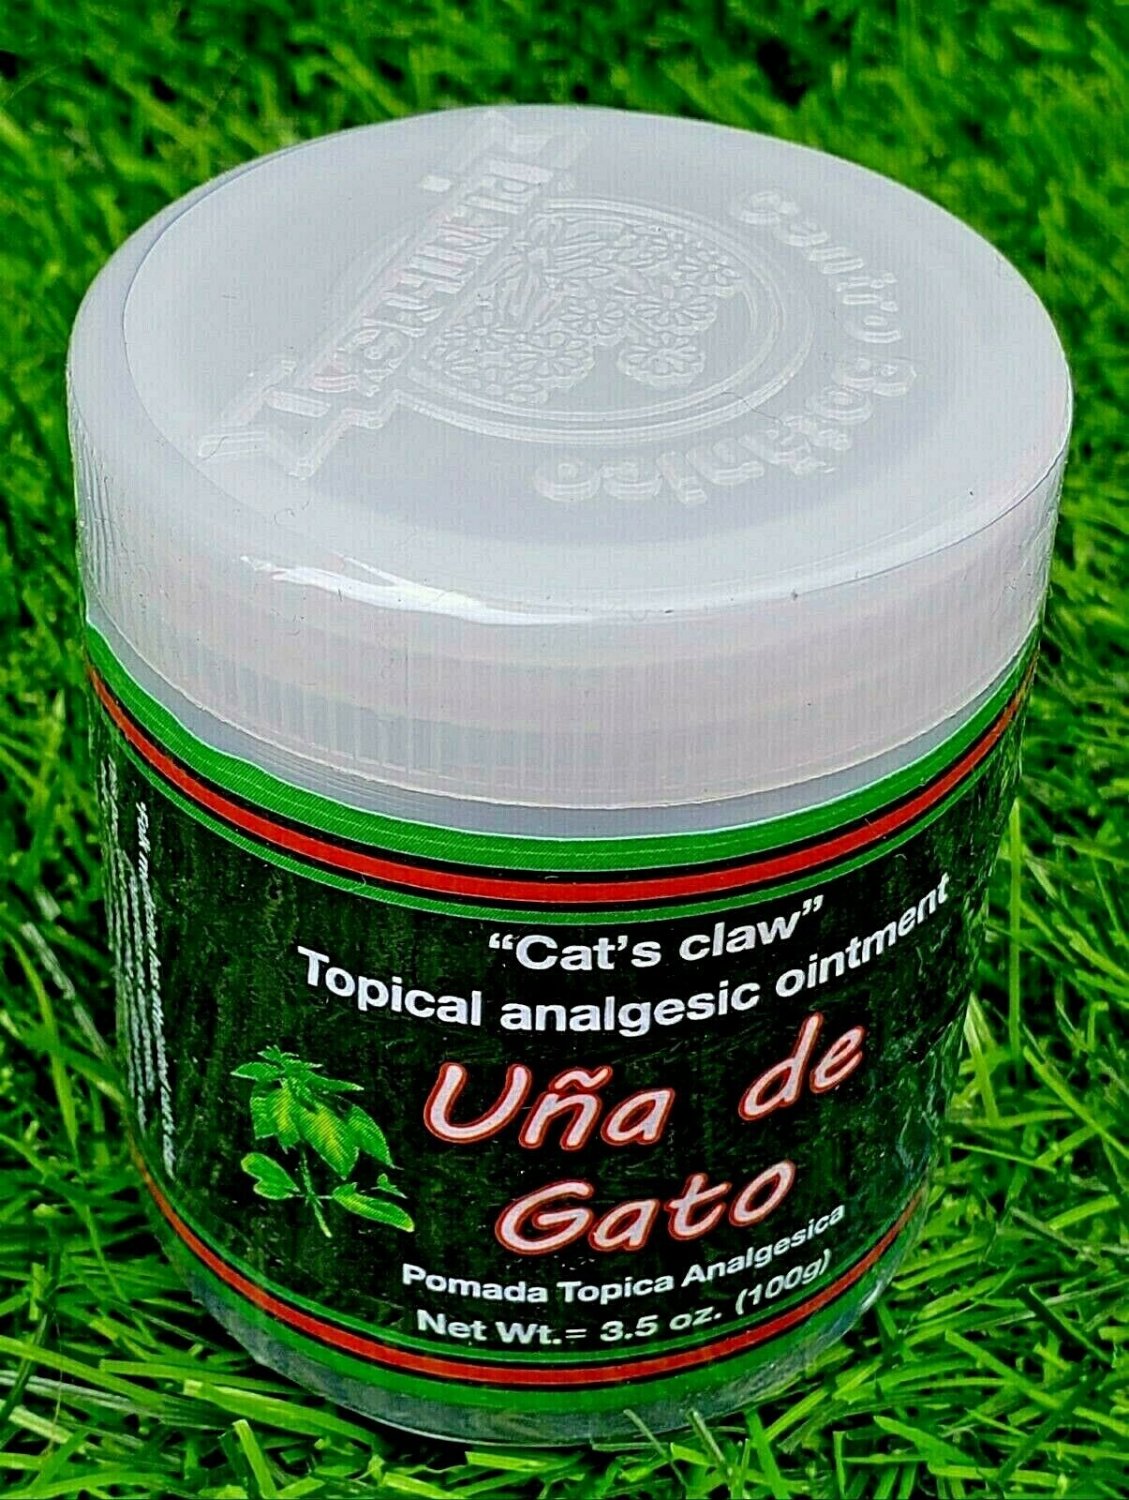 2packs UNA de GATO (Cat's Claw) Ointment Analgesic Pomada Topica Analgesica 100g